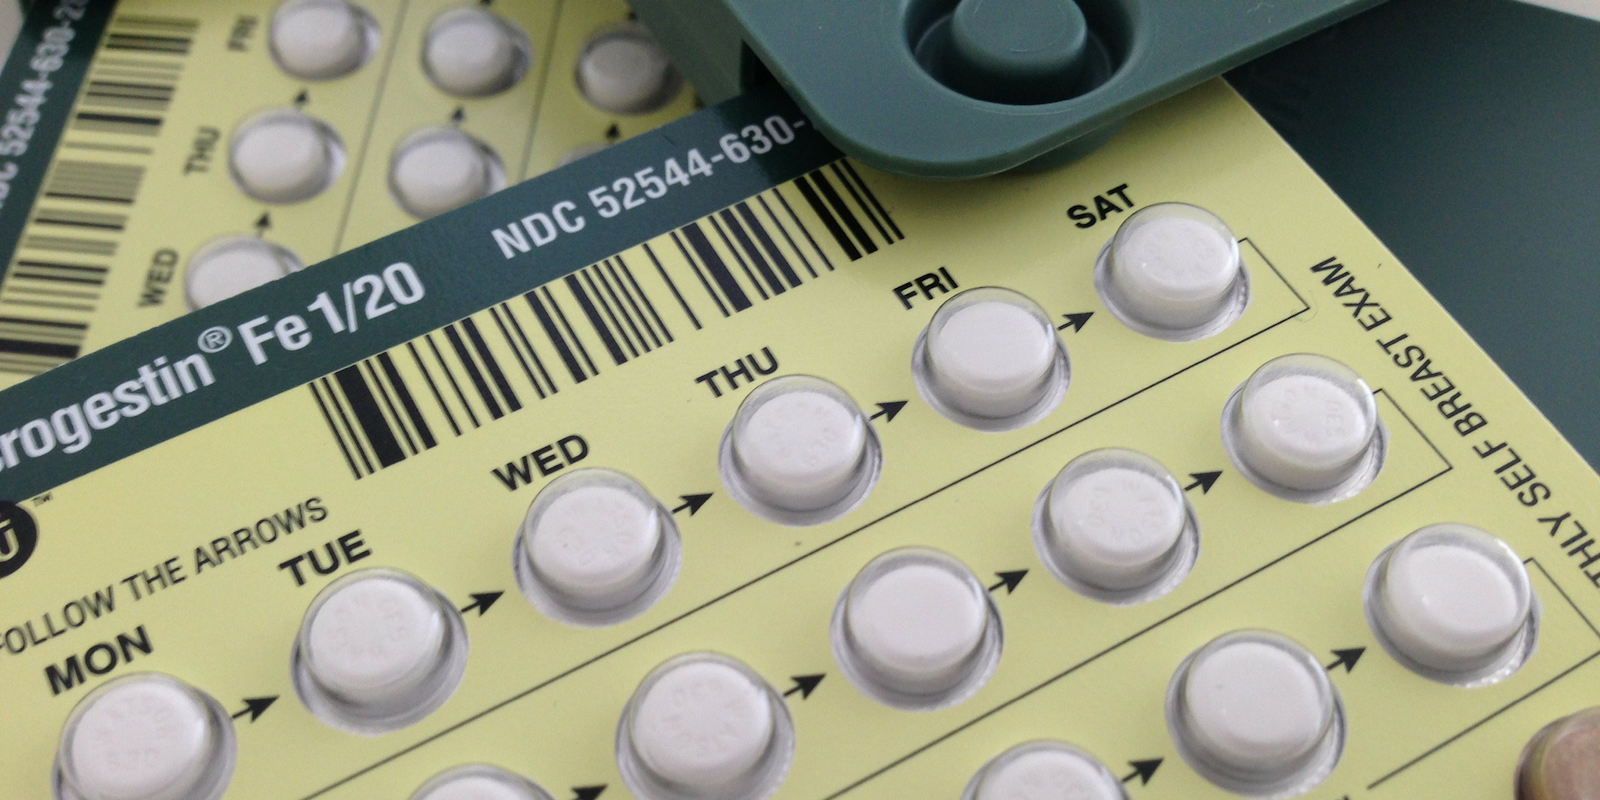 A birth control pill pack